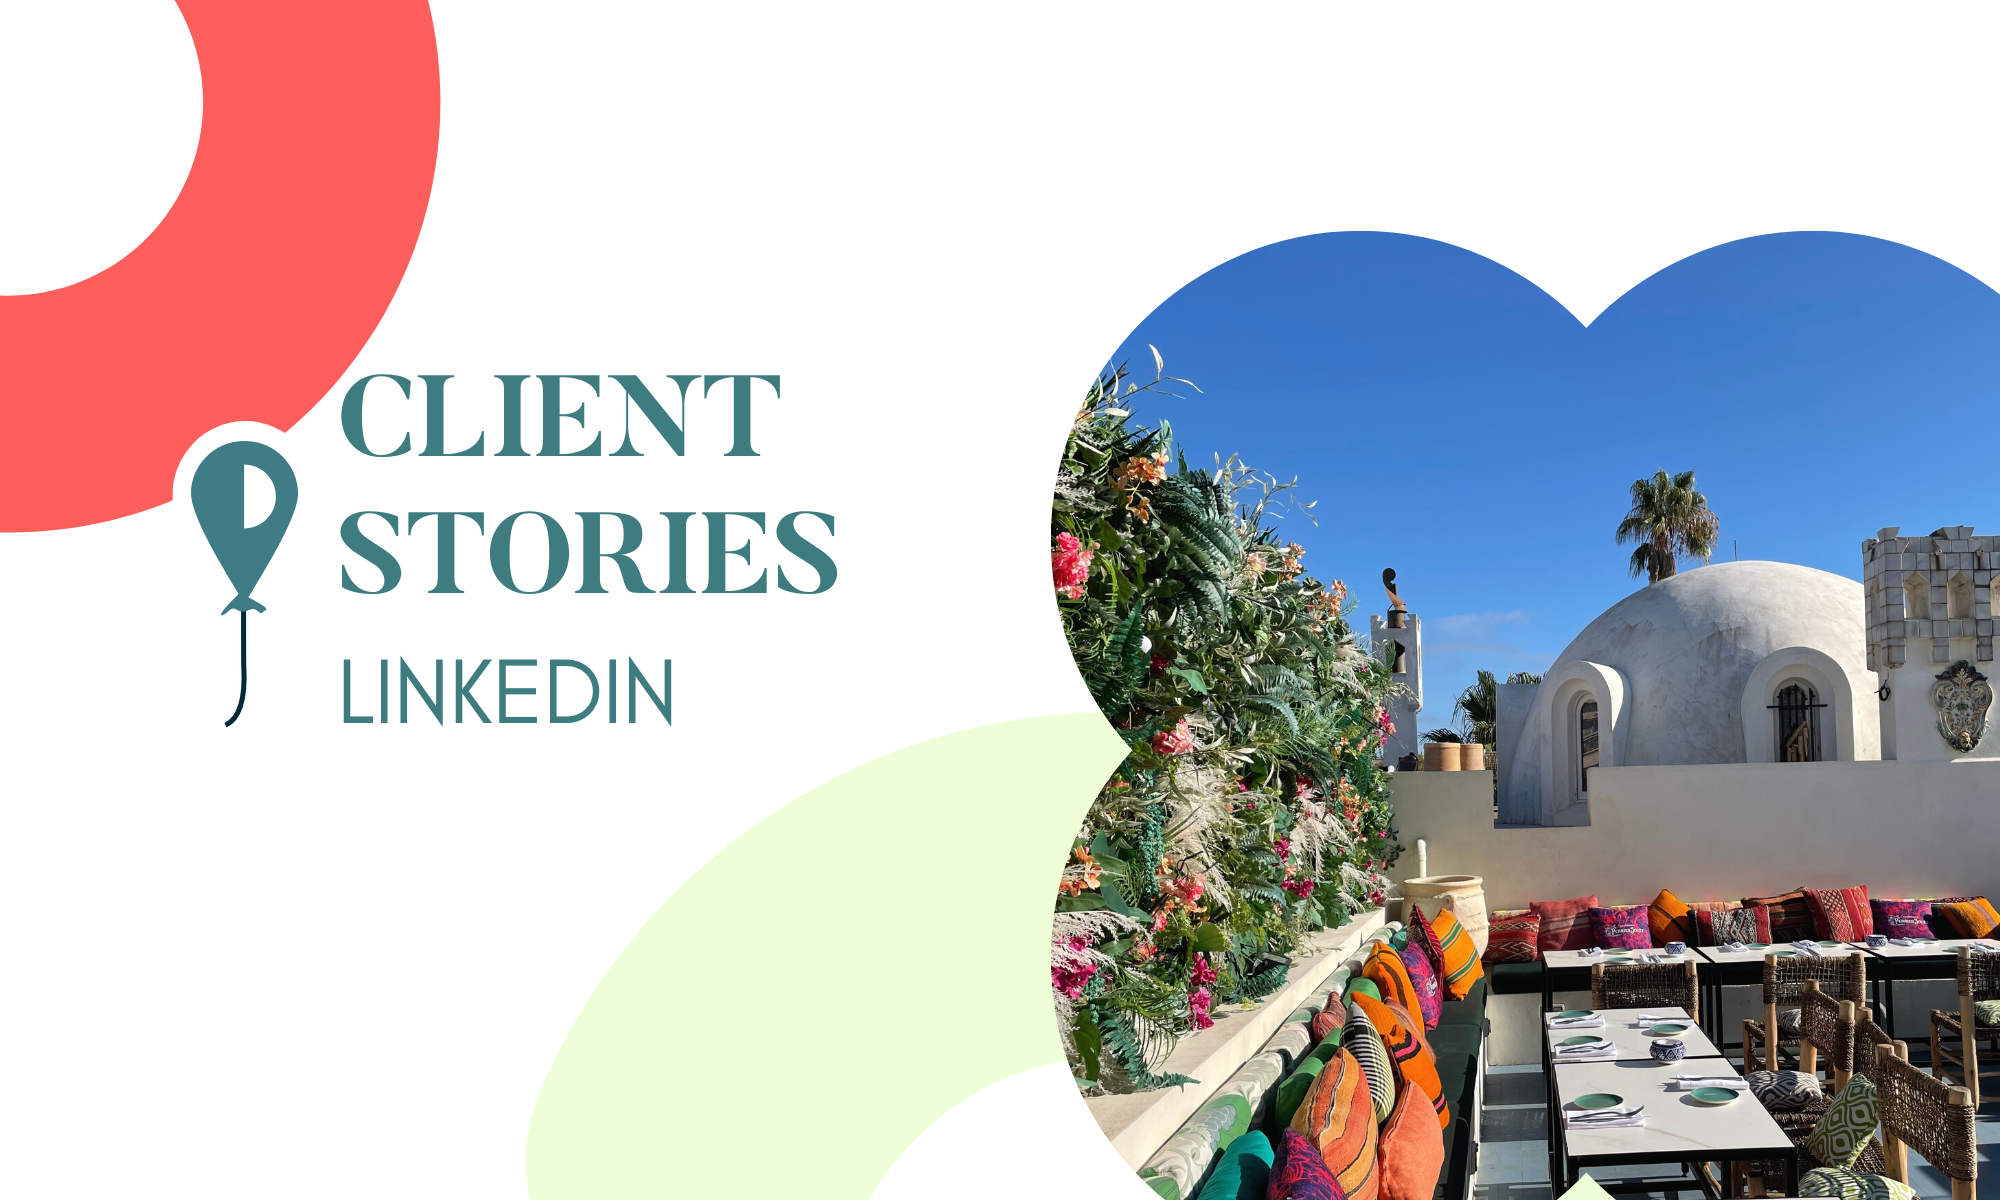 Client Stories - LinkedIn